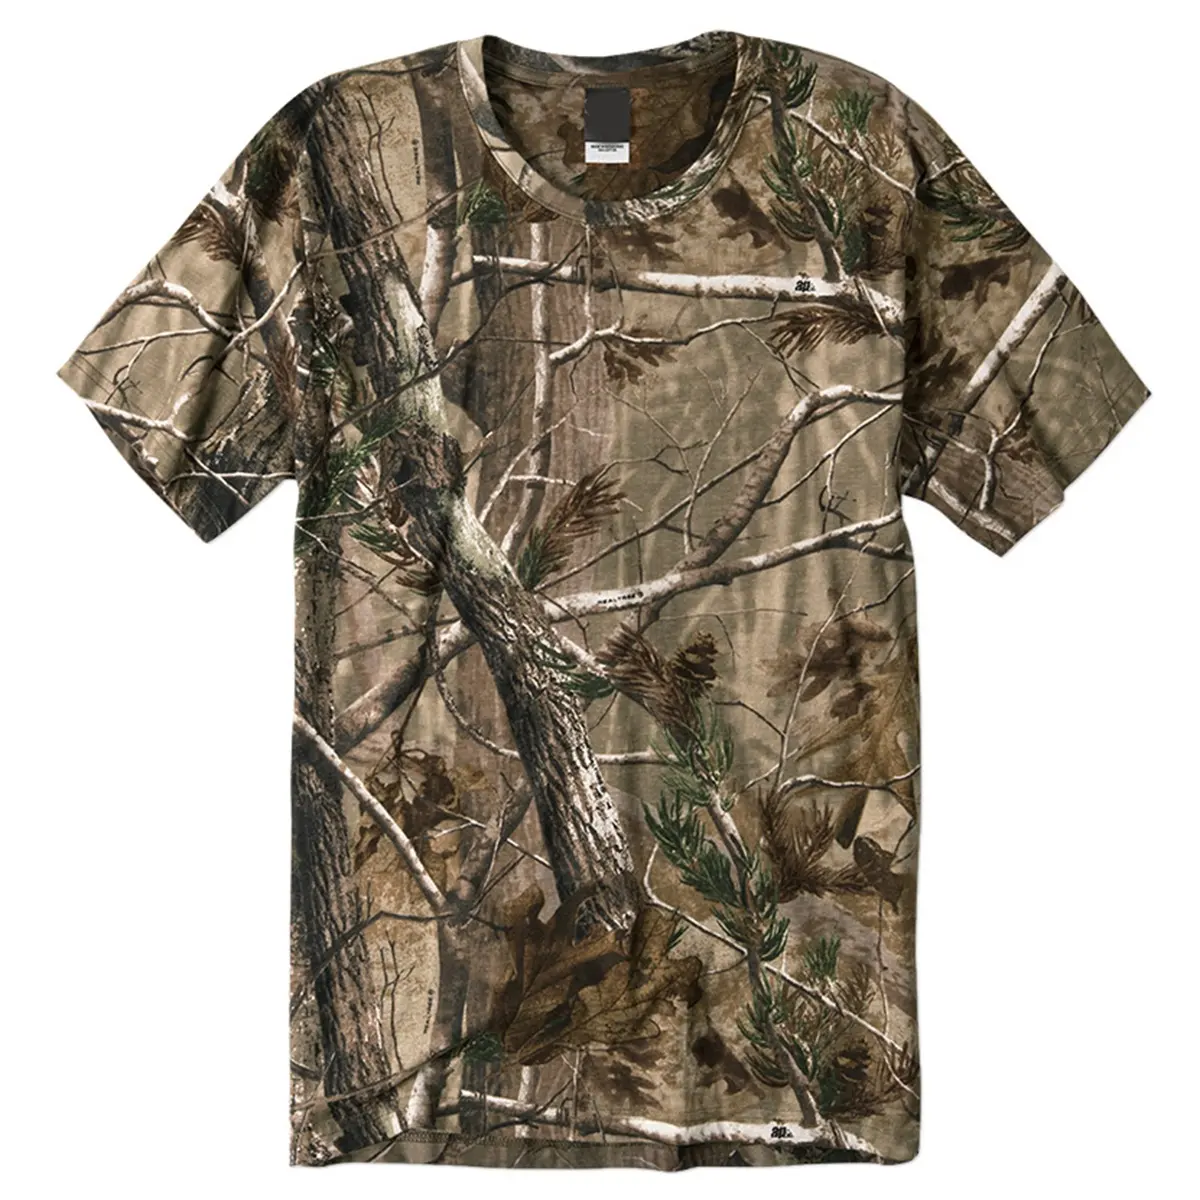 Tree print Jungle printed palm tree real camo T Shirt Tshirt Men T-shirts man 100% Cotton made tees shirts half sleeves